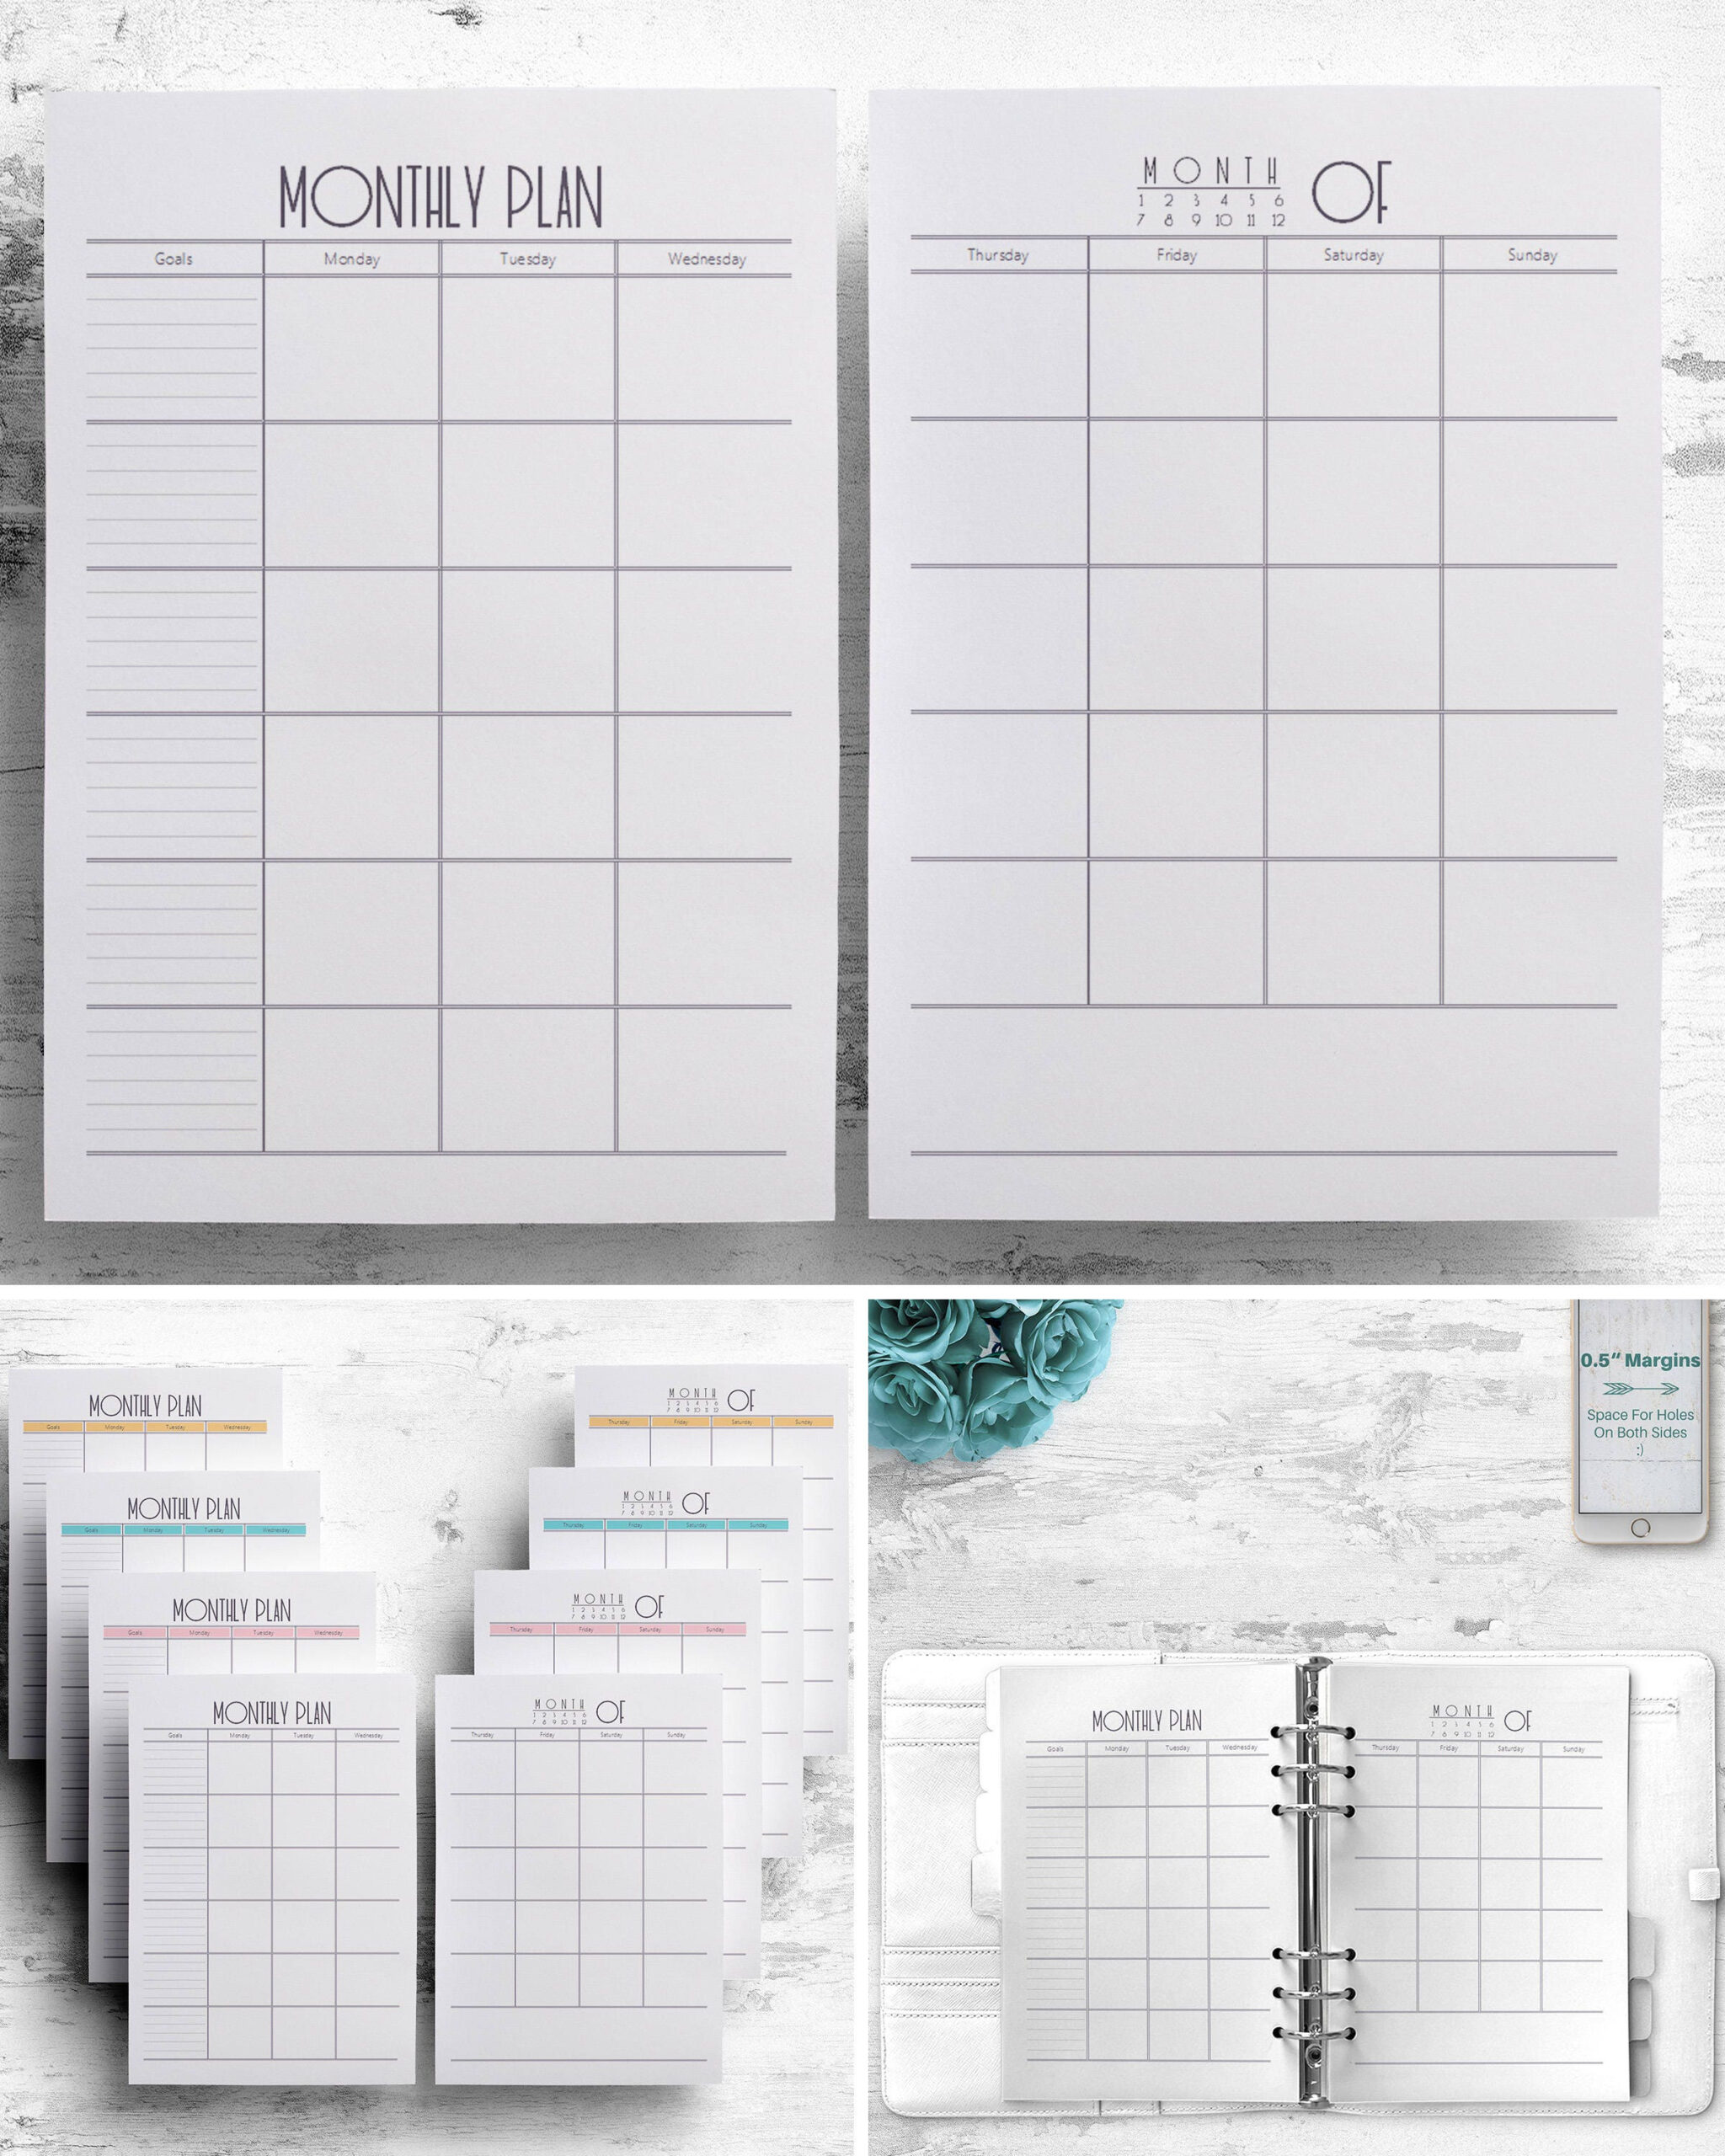 Basic Monthly Planner Printable Half Size A4 Calendar Agenda | Etsy in Half Size Monthly Printable Calendar